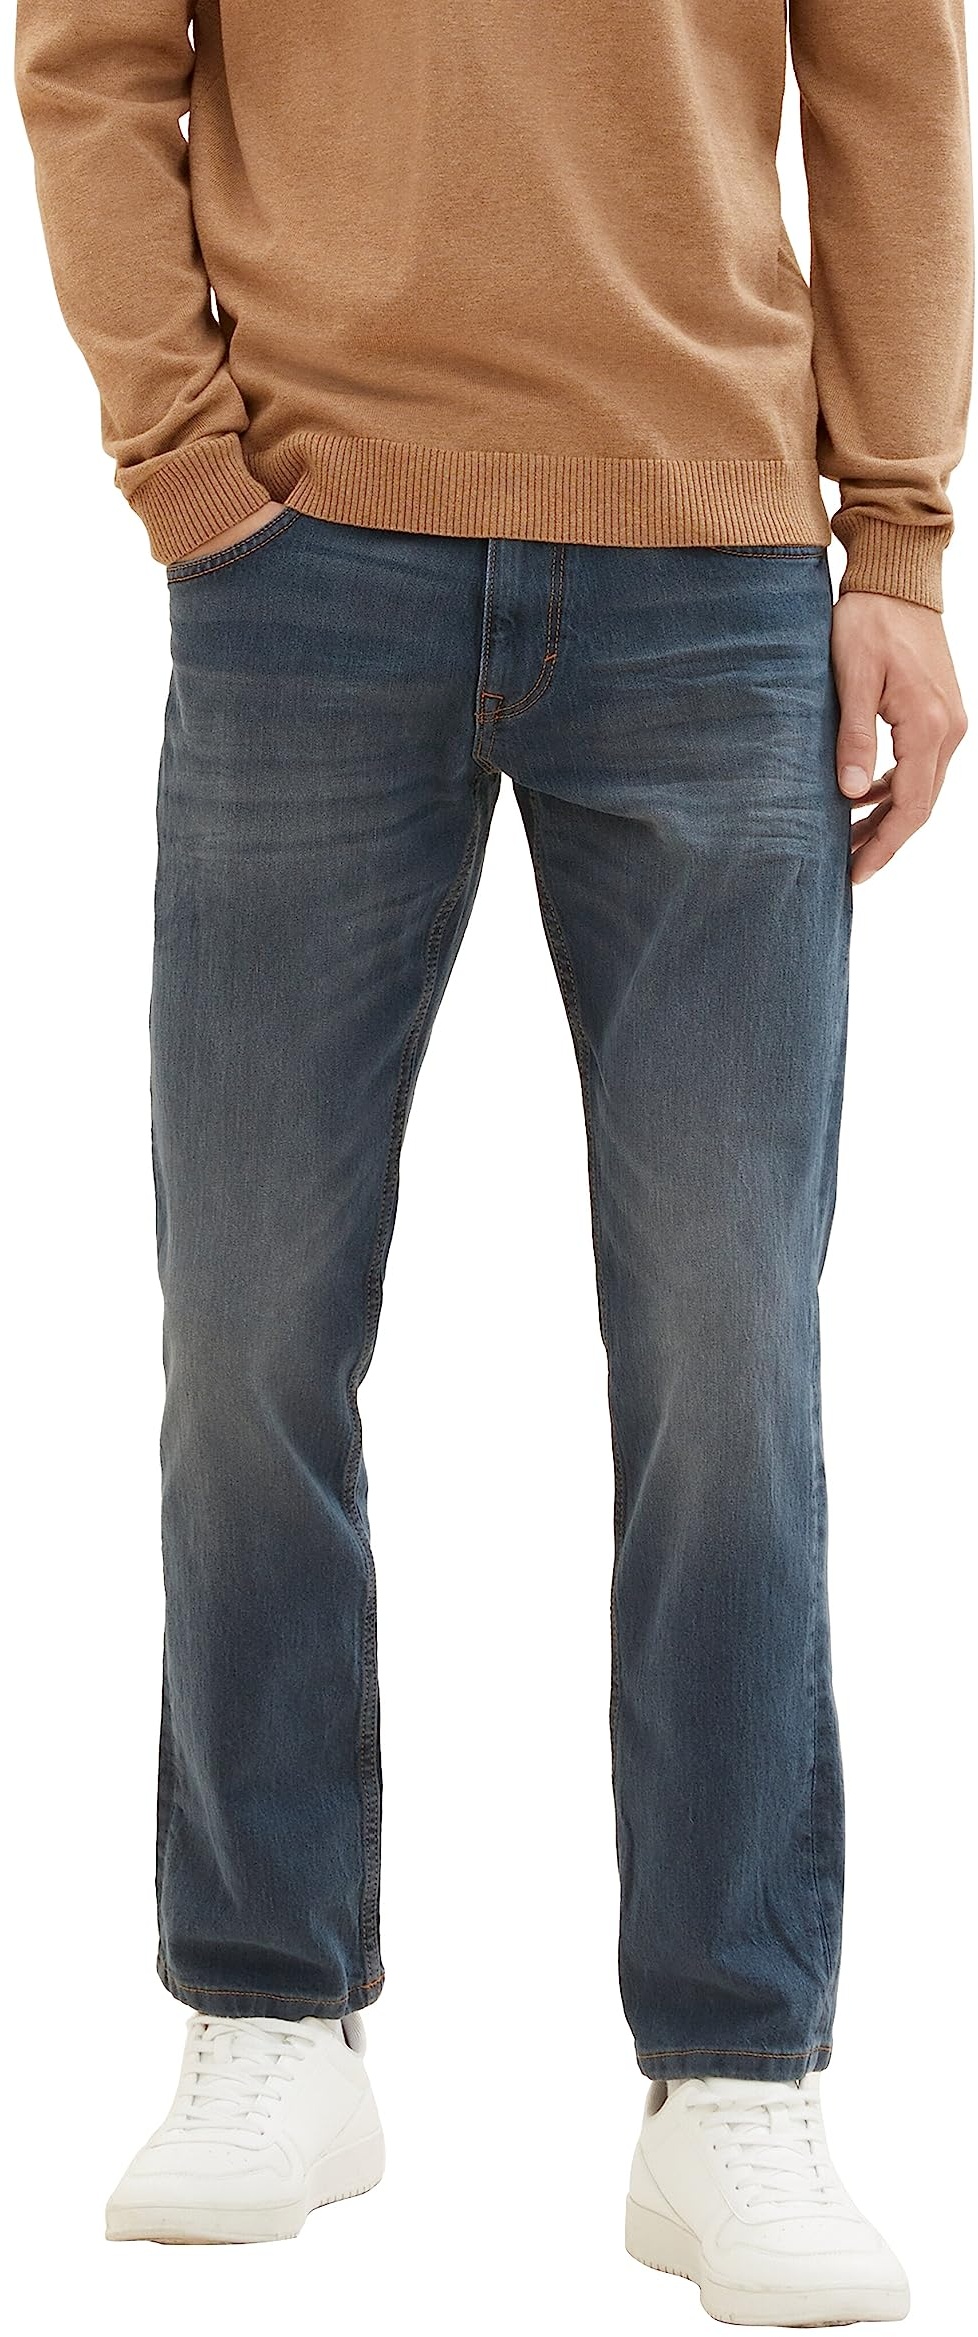 TOM TAILOR Herren Marvin Straight Jeans, 10281 - Mid Stone Wash Denim, 30/34